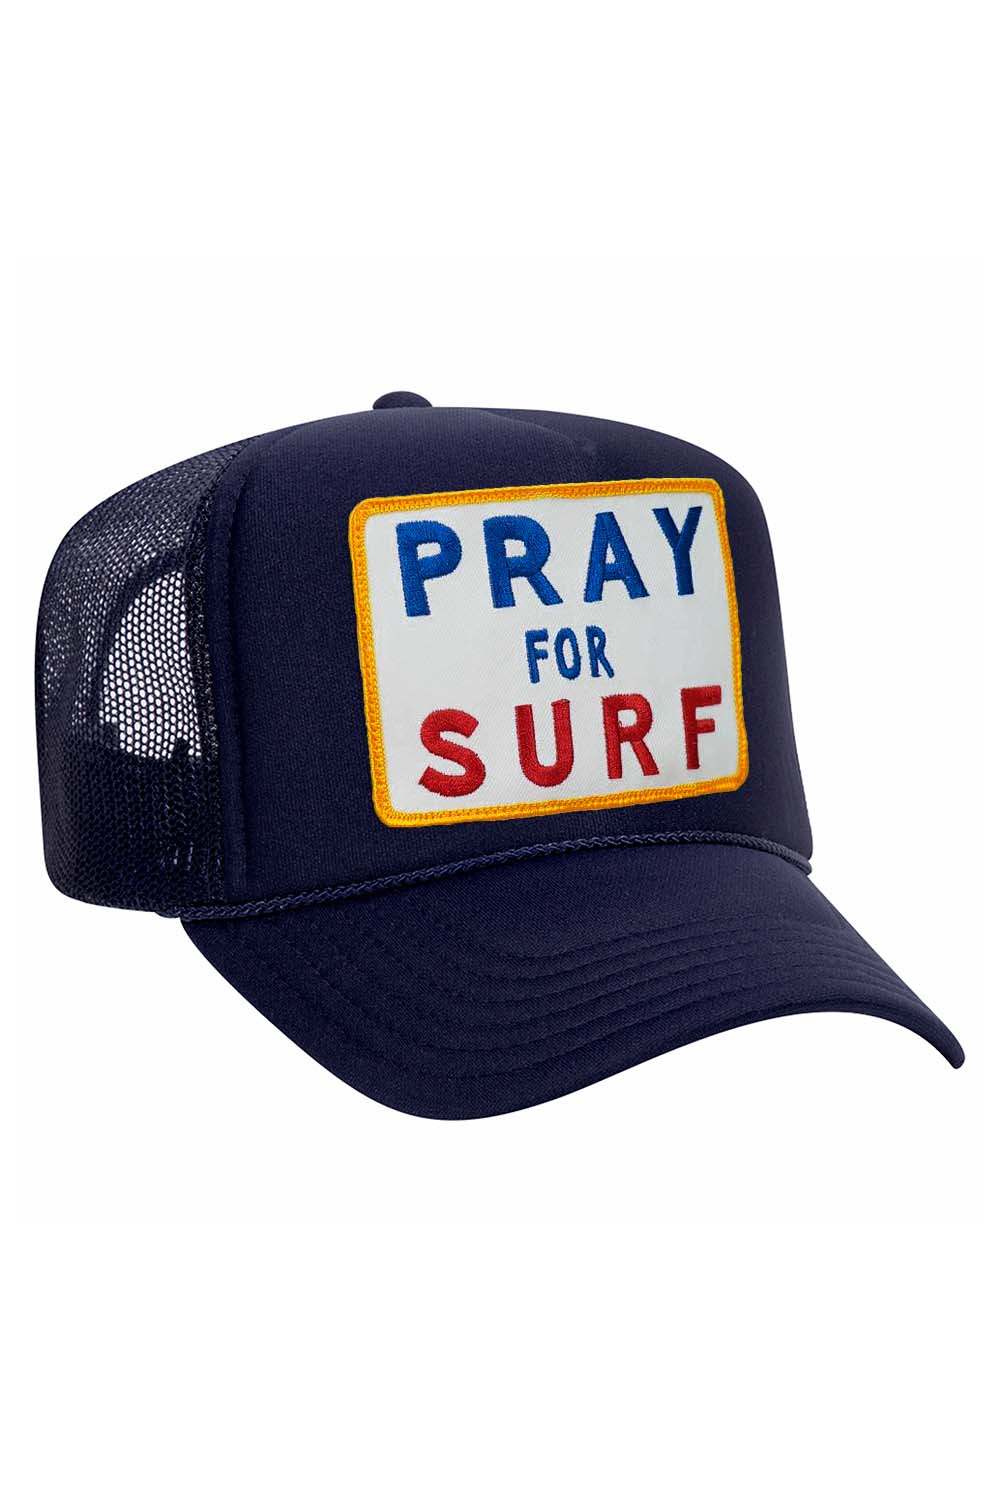 PRAY FOR SURF VINTAGE TRUCKER HAT HATS Aviator Nation OS NAVY 